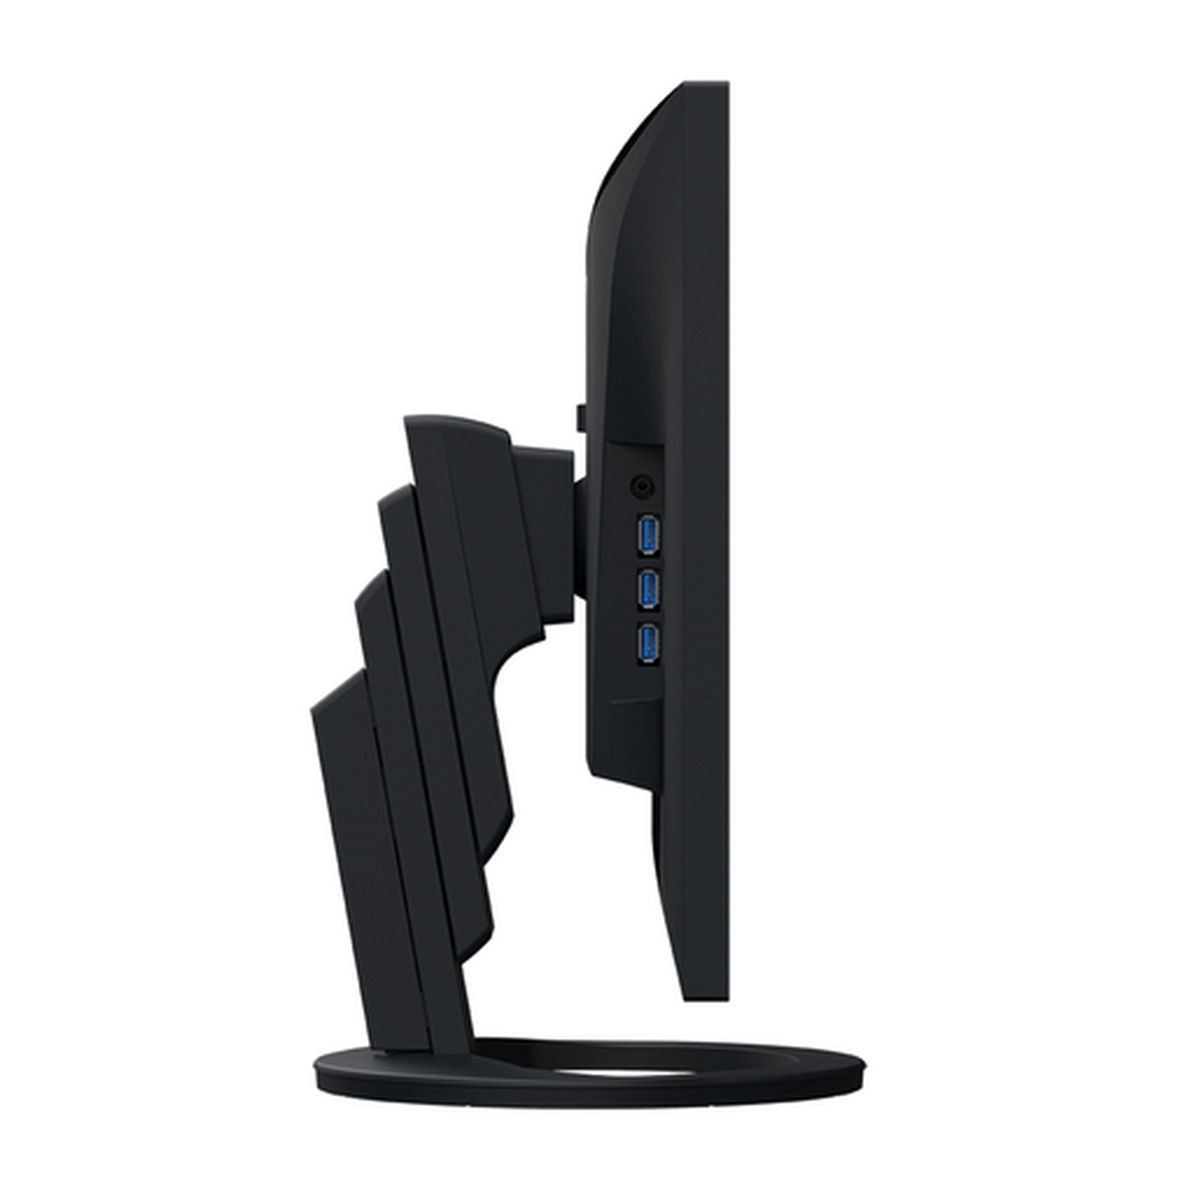 Eizo EV2485-BK 61,1 cm (24,1") schwarz, FlexScan Office-Monitor